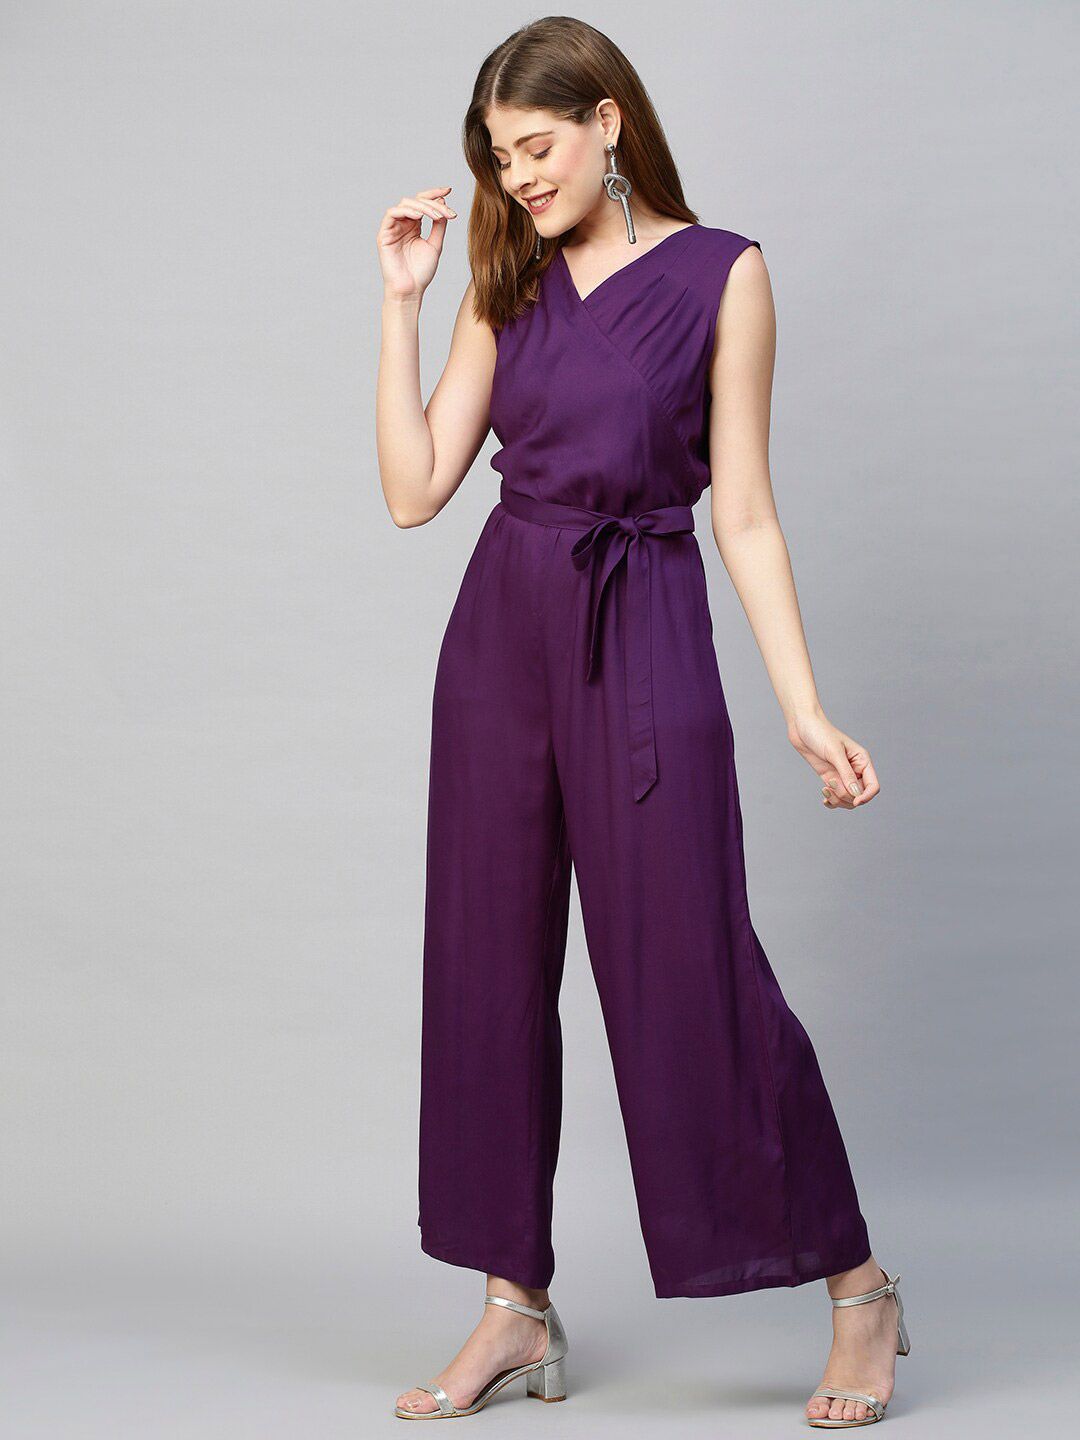 FASHOR Purple Wrap Basic Jumpsuit Price in India